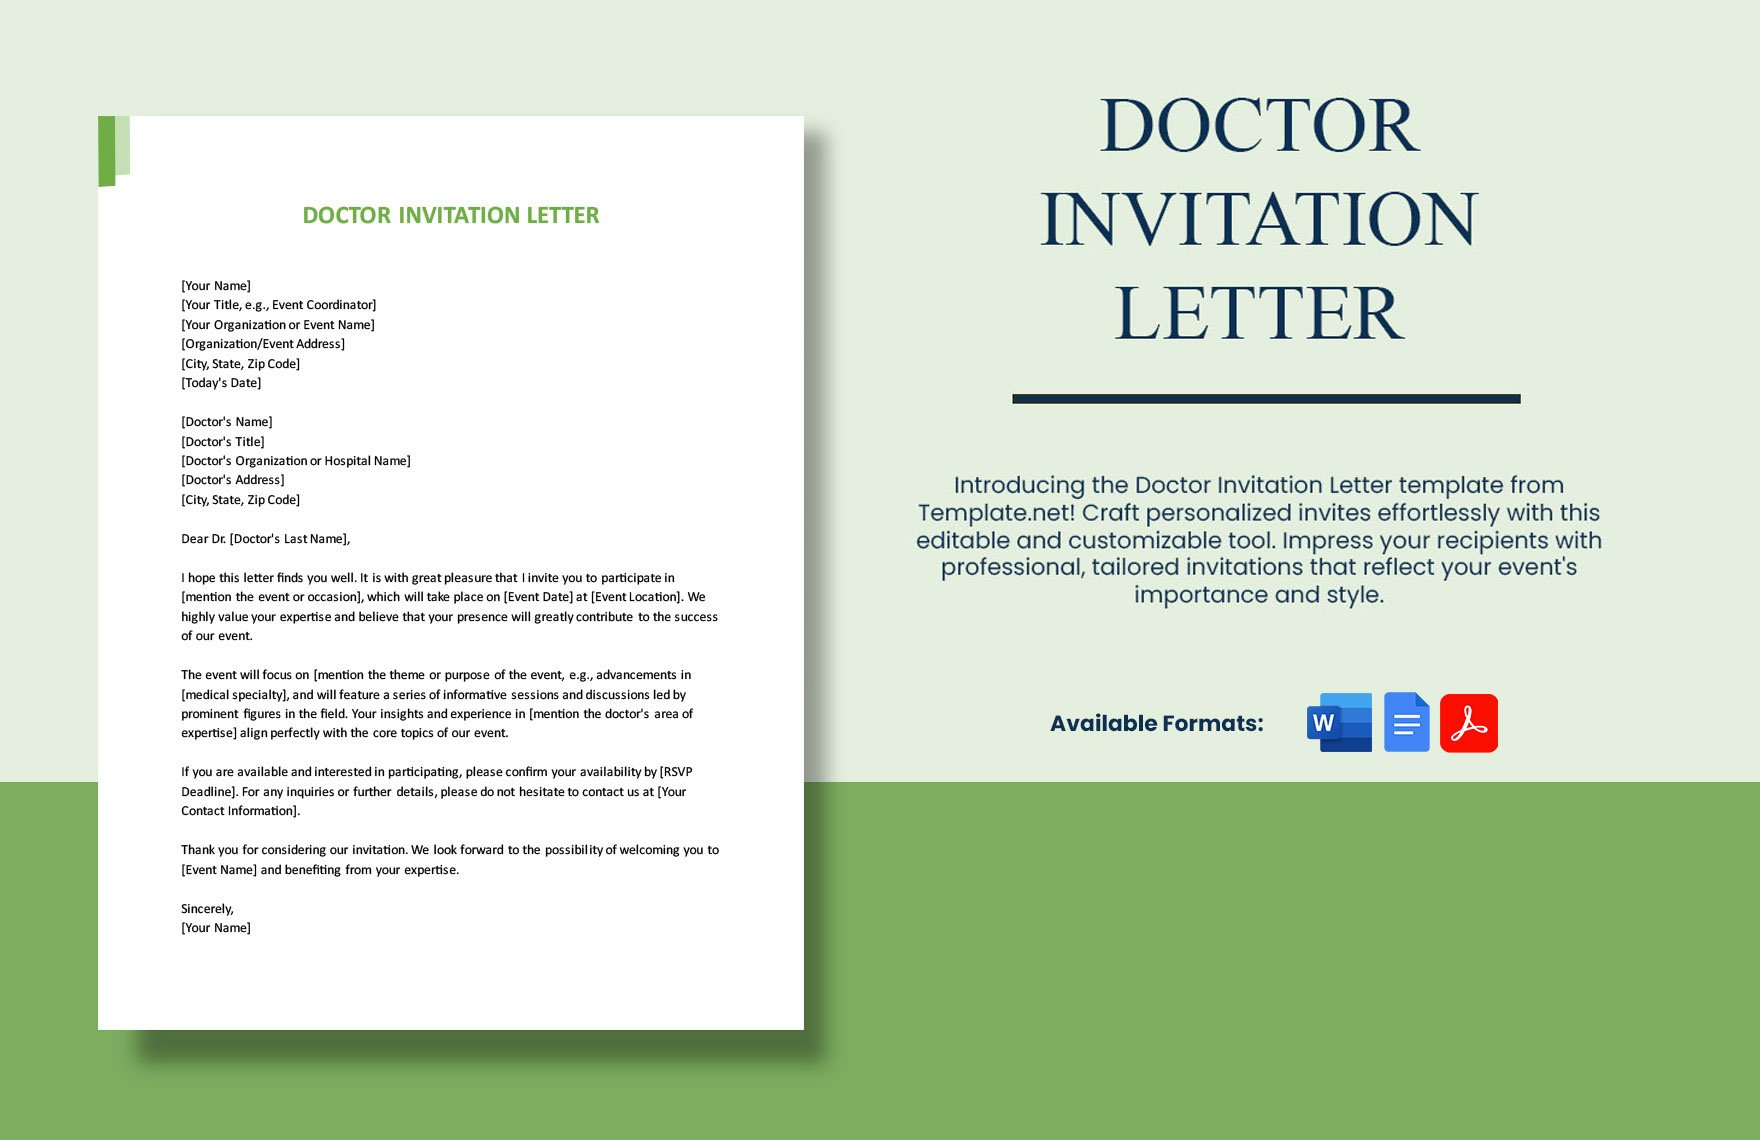 Doctor Invitation Letter